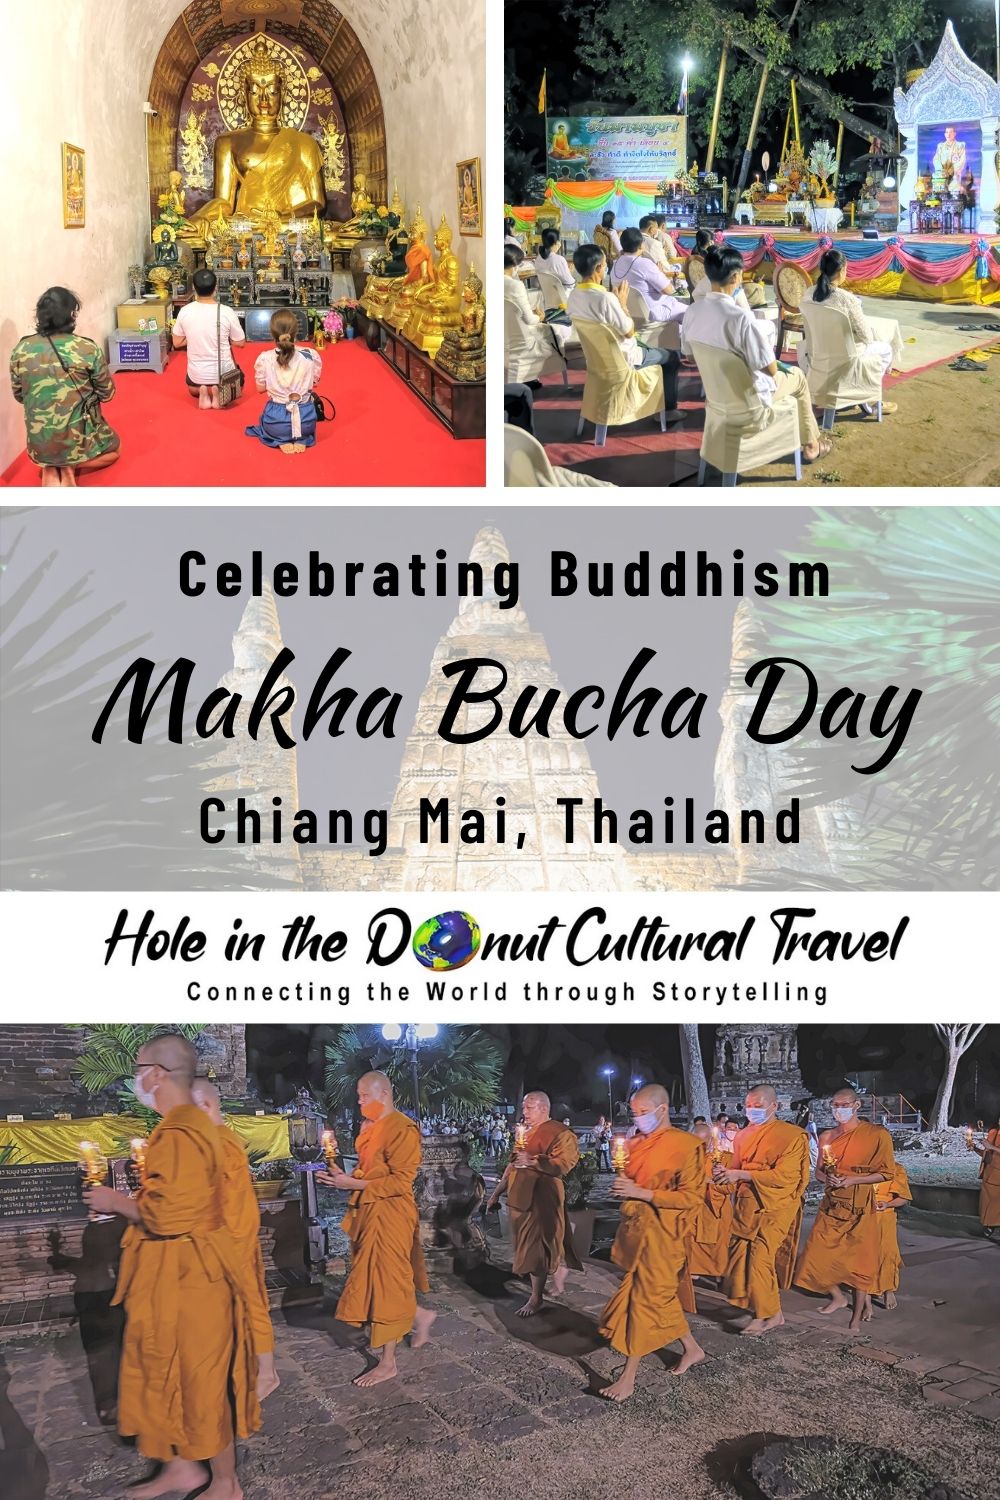 Celebrating Makha Bucha Day in Chiang Mai, Thailand